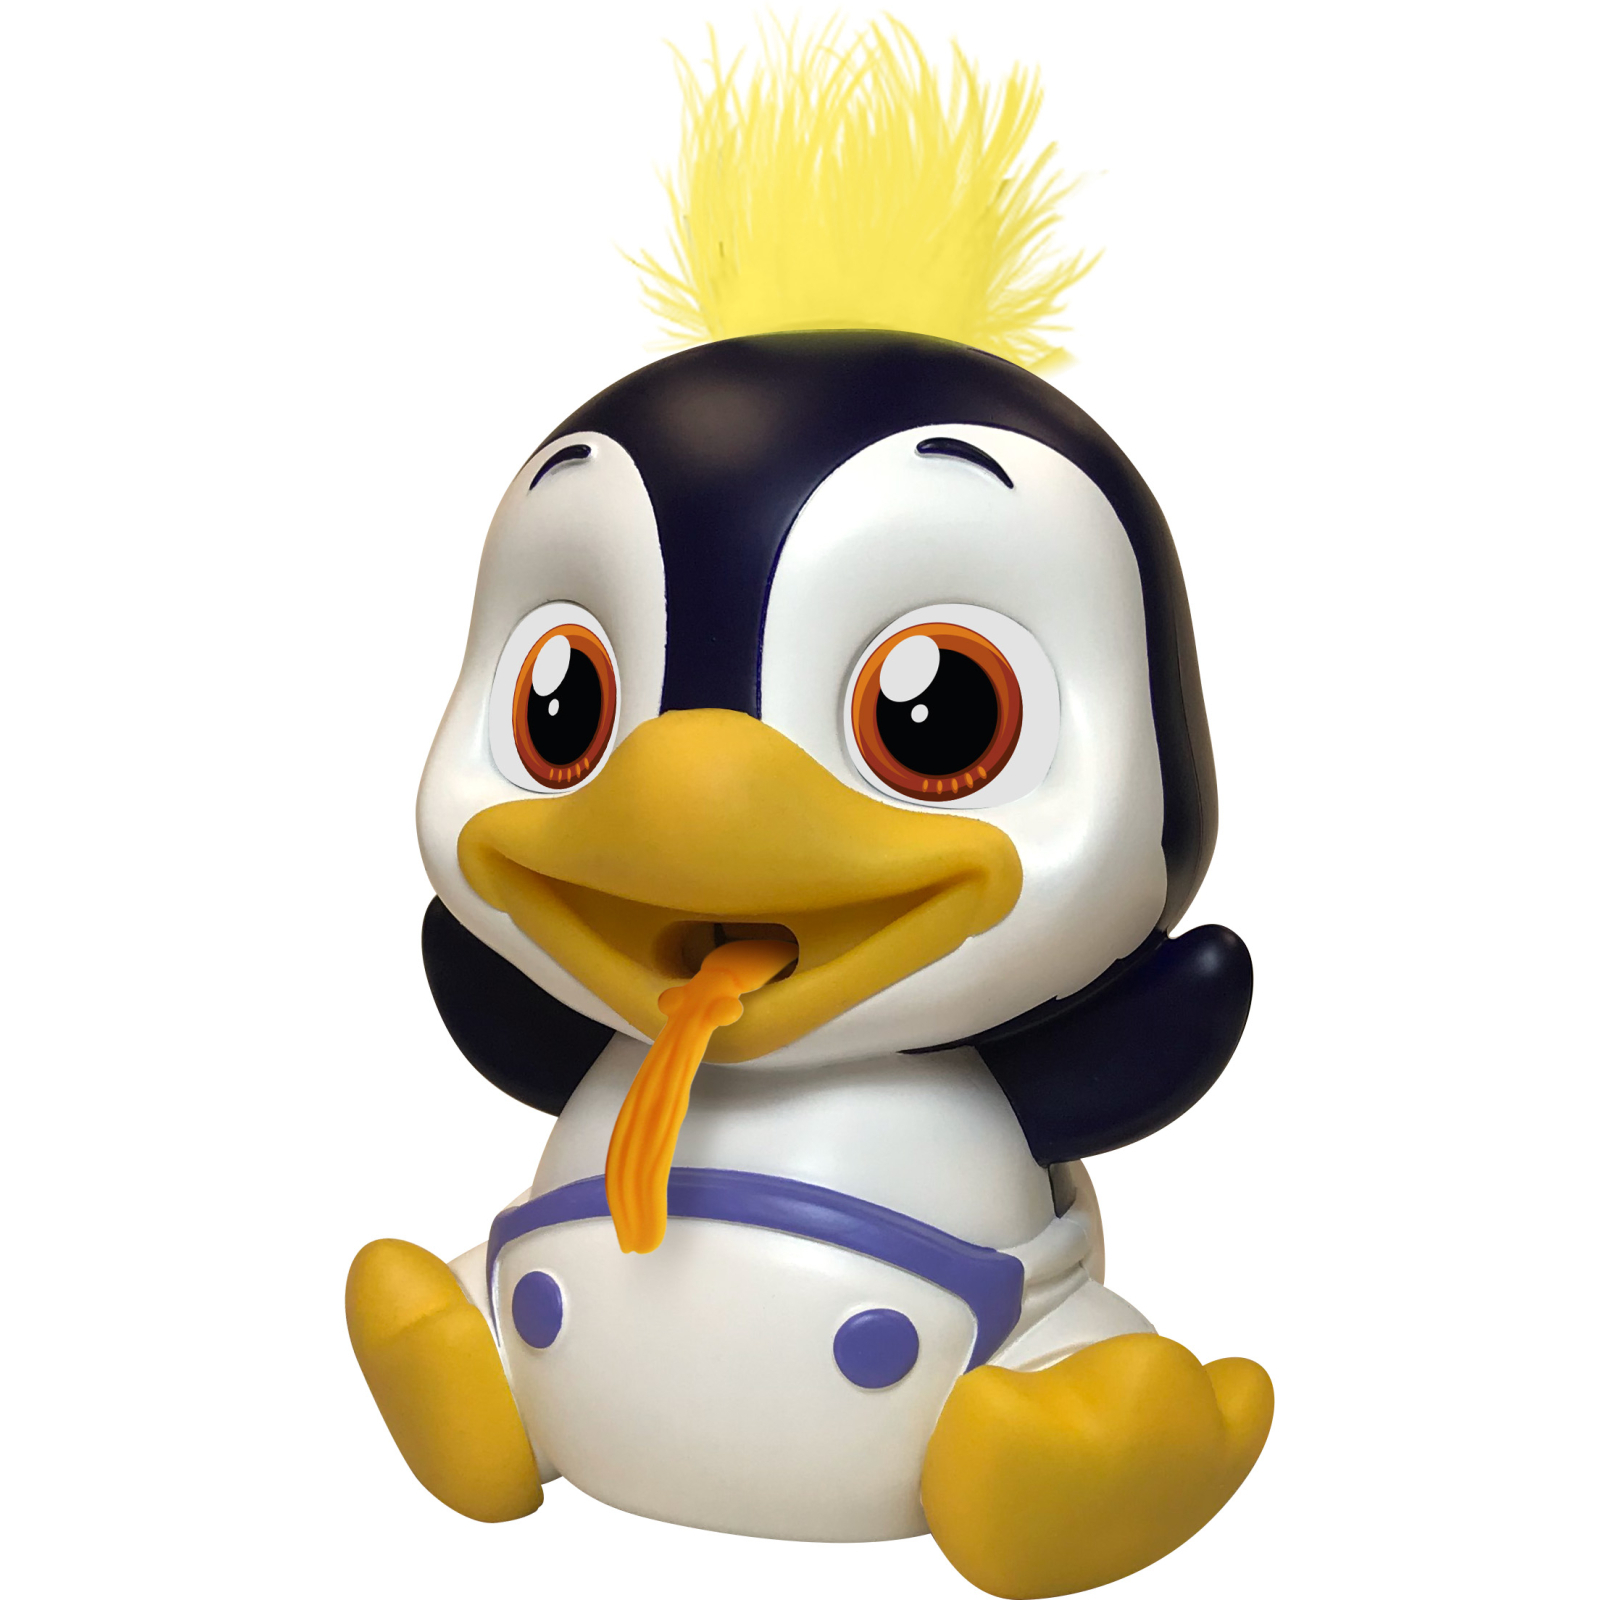 Интерактивная игрушка Genesis Munchkinz Лакомка Пингвин (51638)